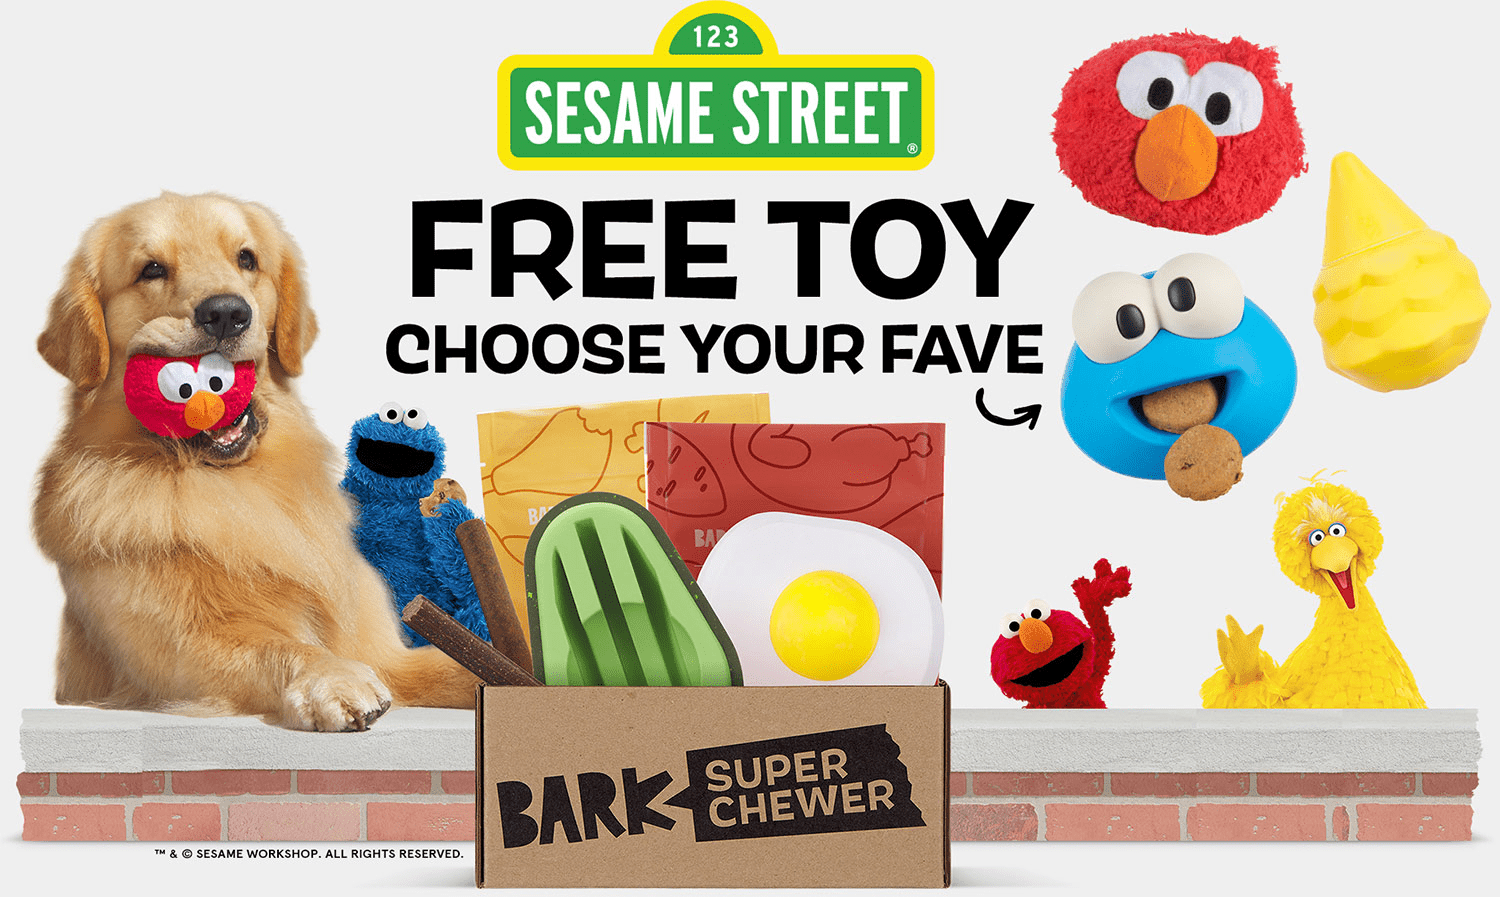 BarkBox Super Chewer Coupon Code – FREE Sesame Street Dog Toy!